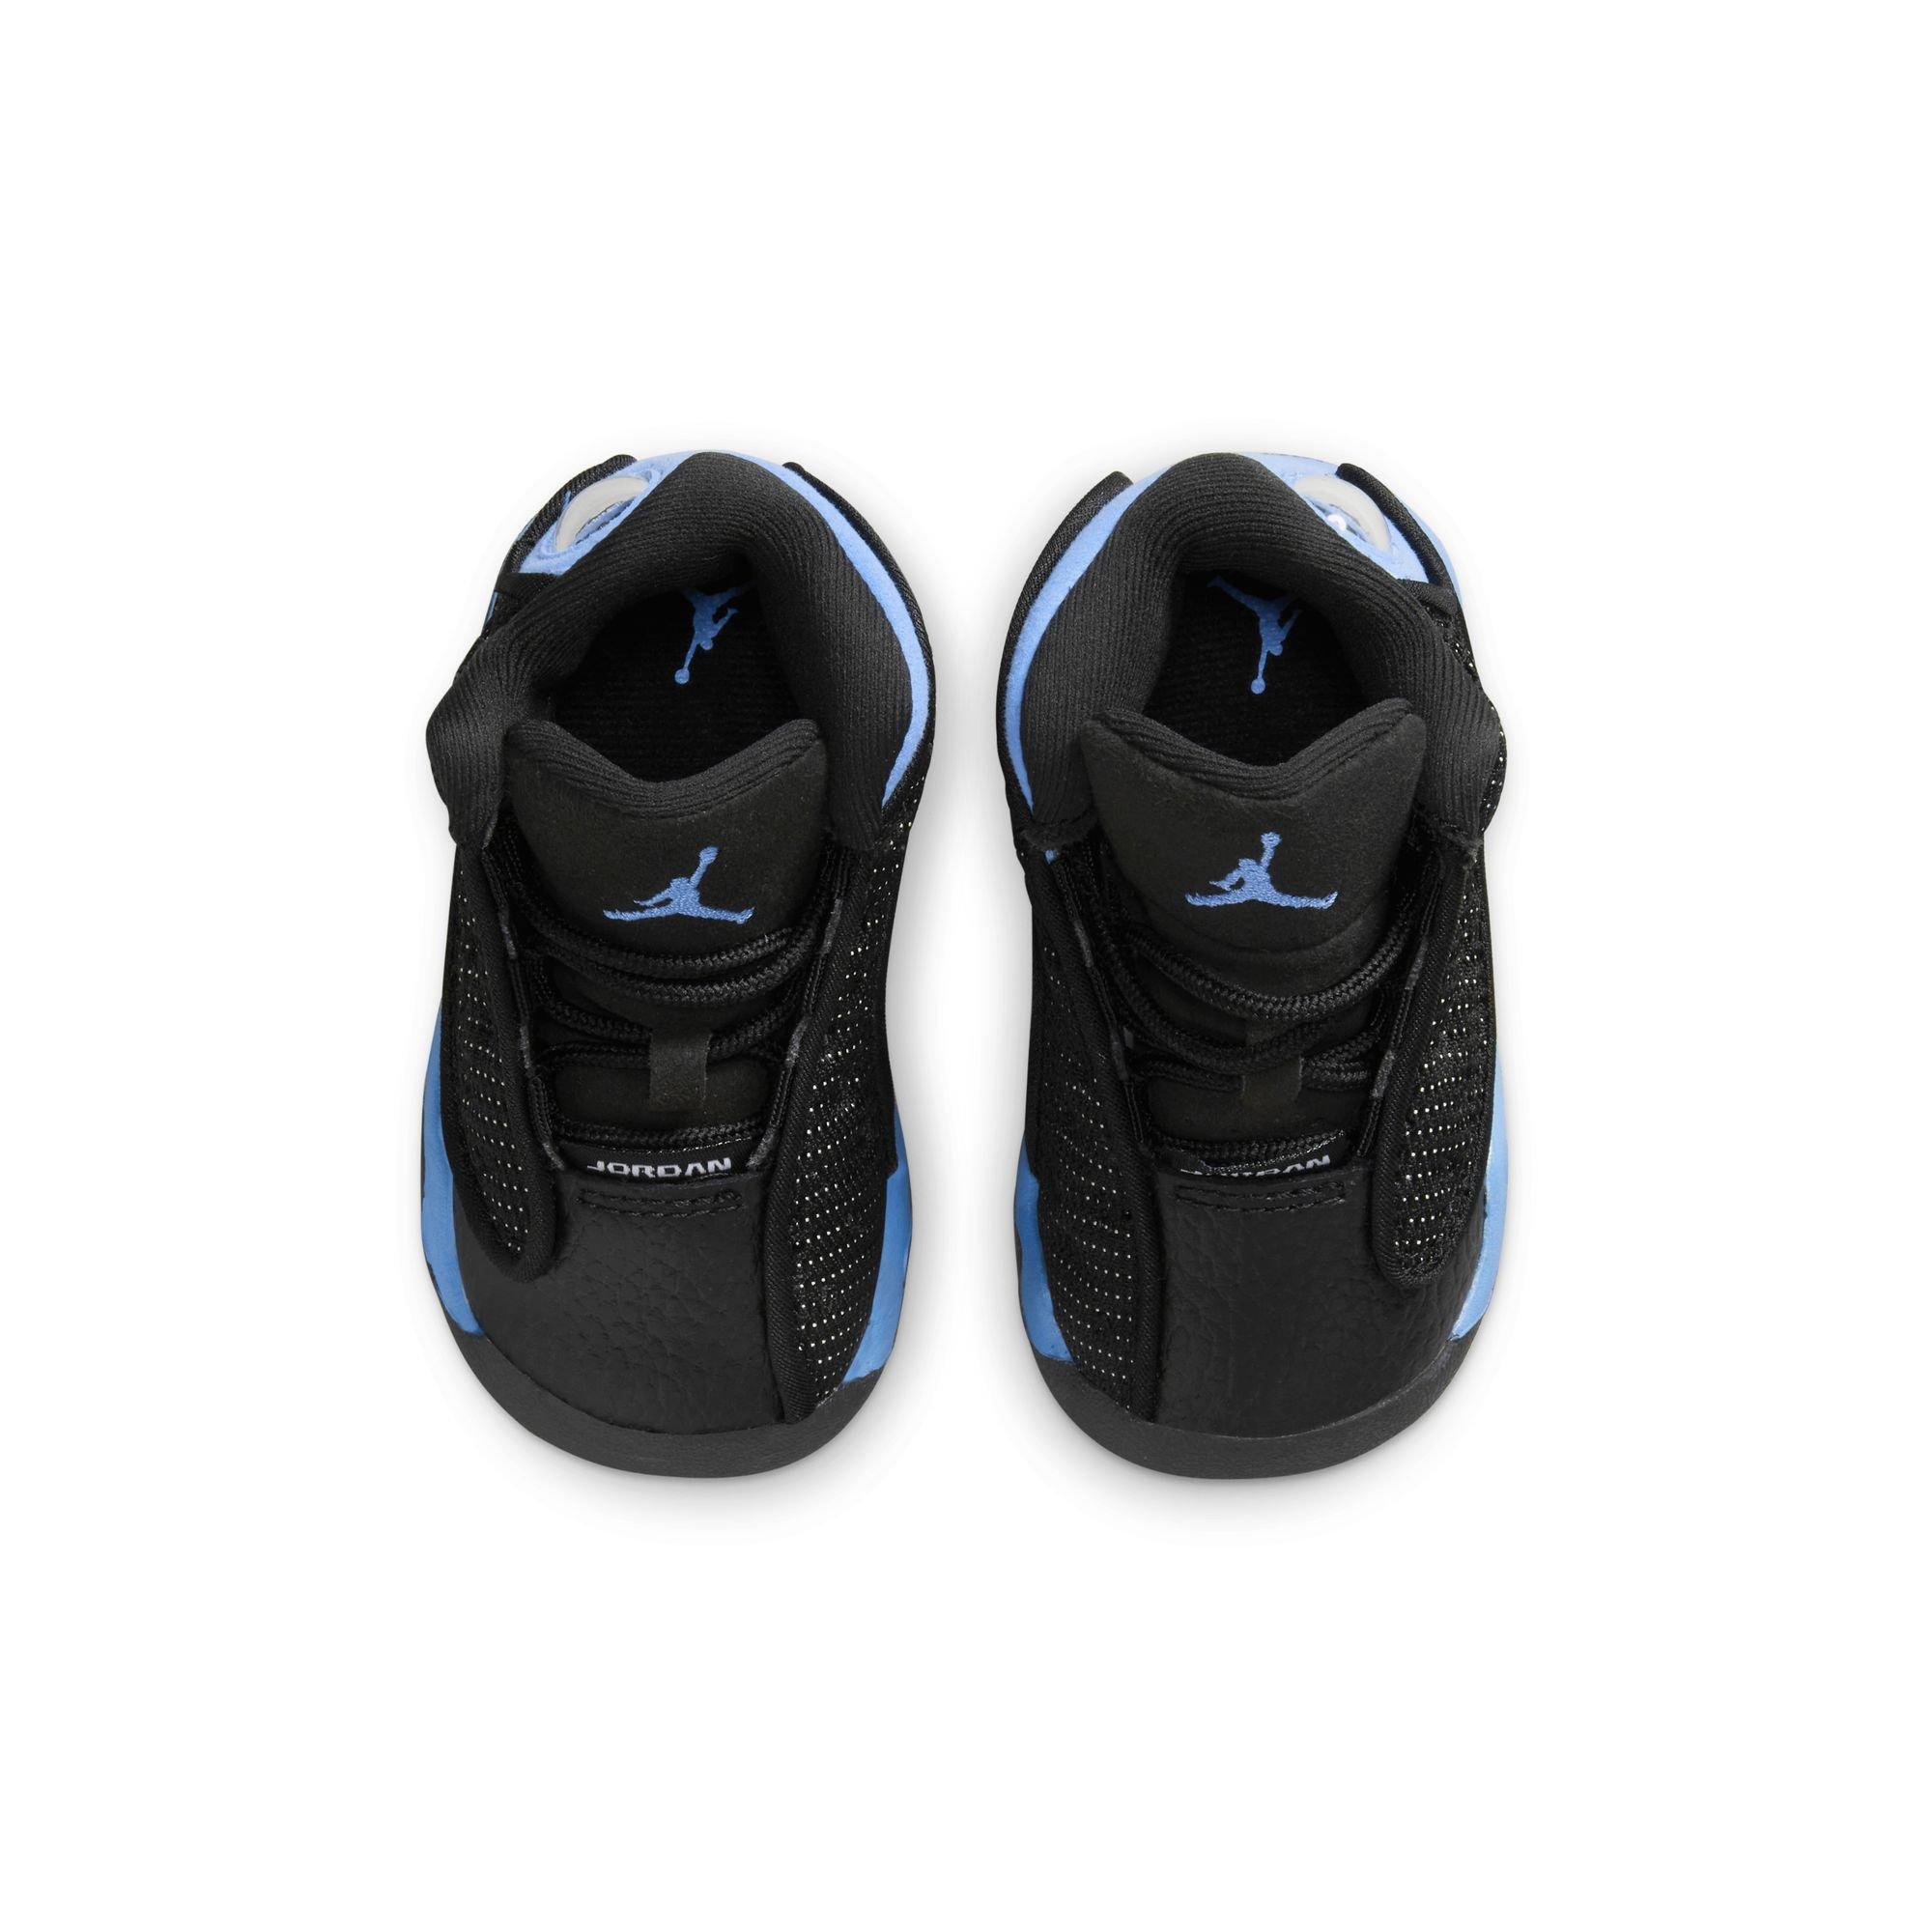 The Air Jordan 13 Retro “University Blue” is Almost Here – DTLR